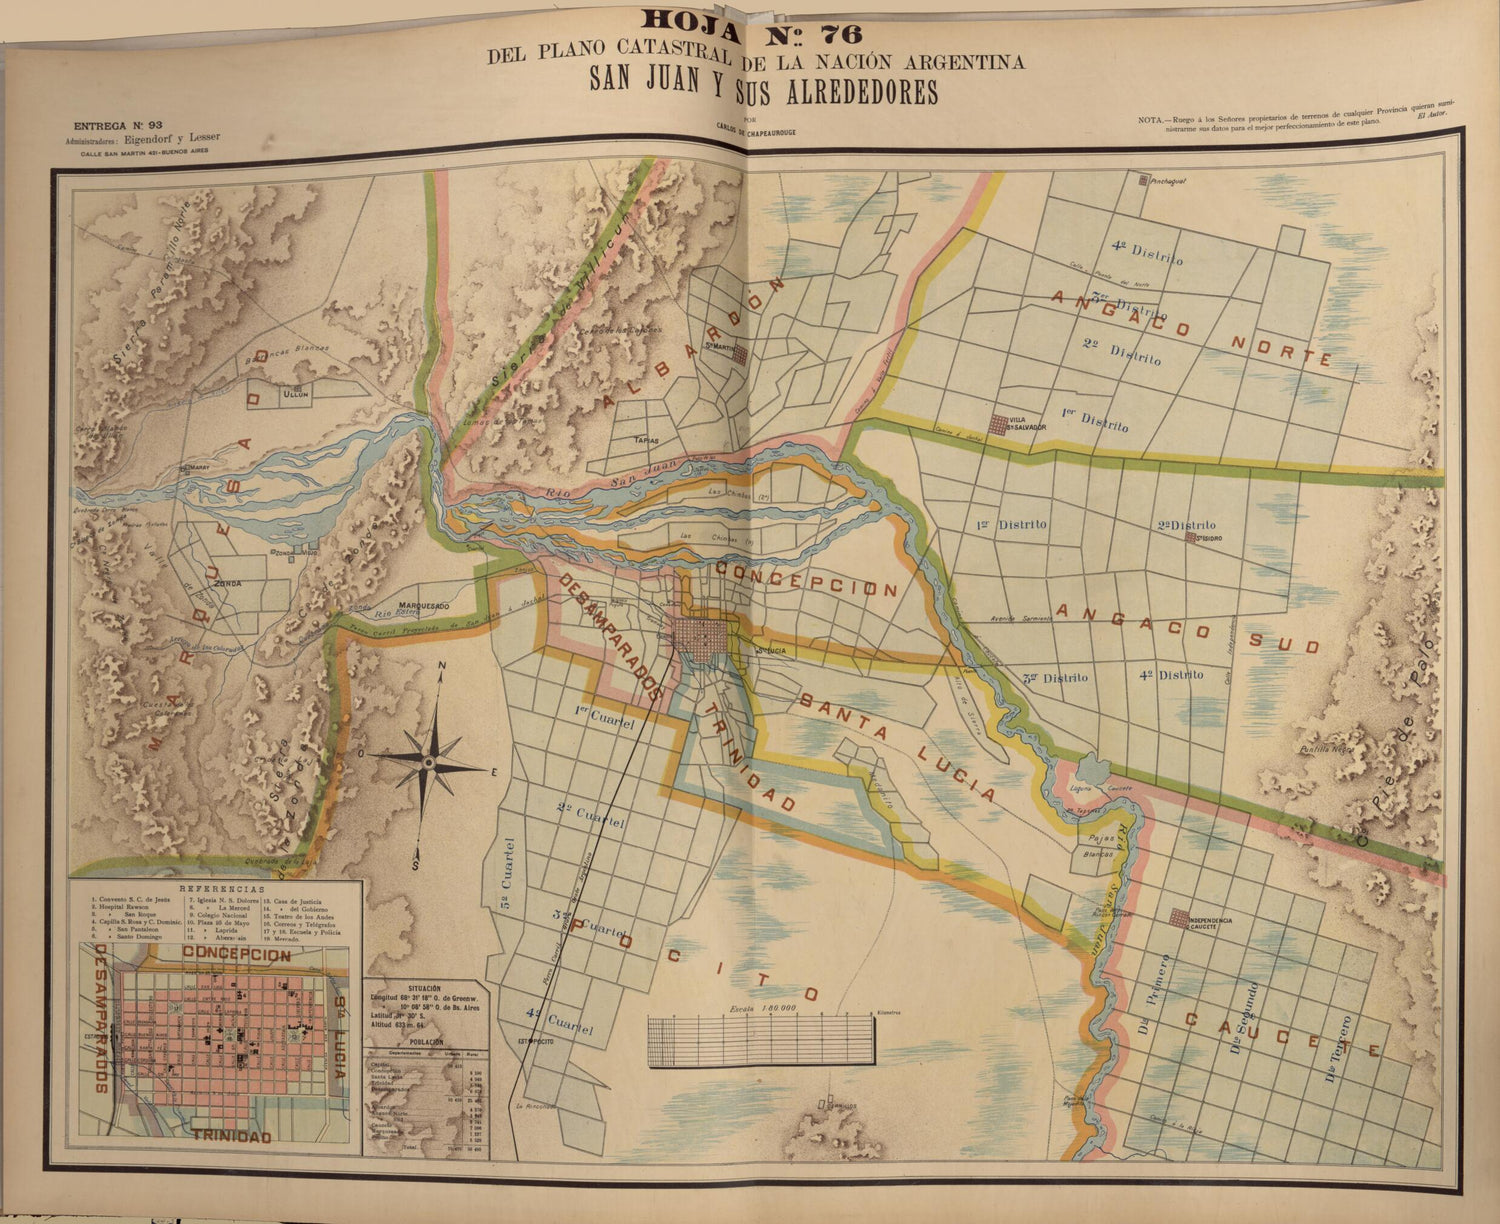 This old map of Plano Catastral De La Nacion Hoja No. 76 from República Argentina from 1905 was created by Carlos De Chapeaurouge in 1905